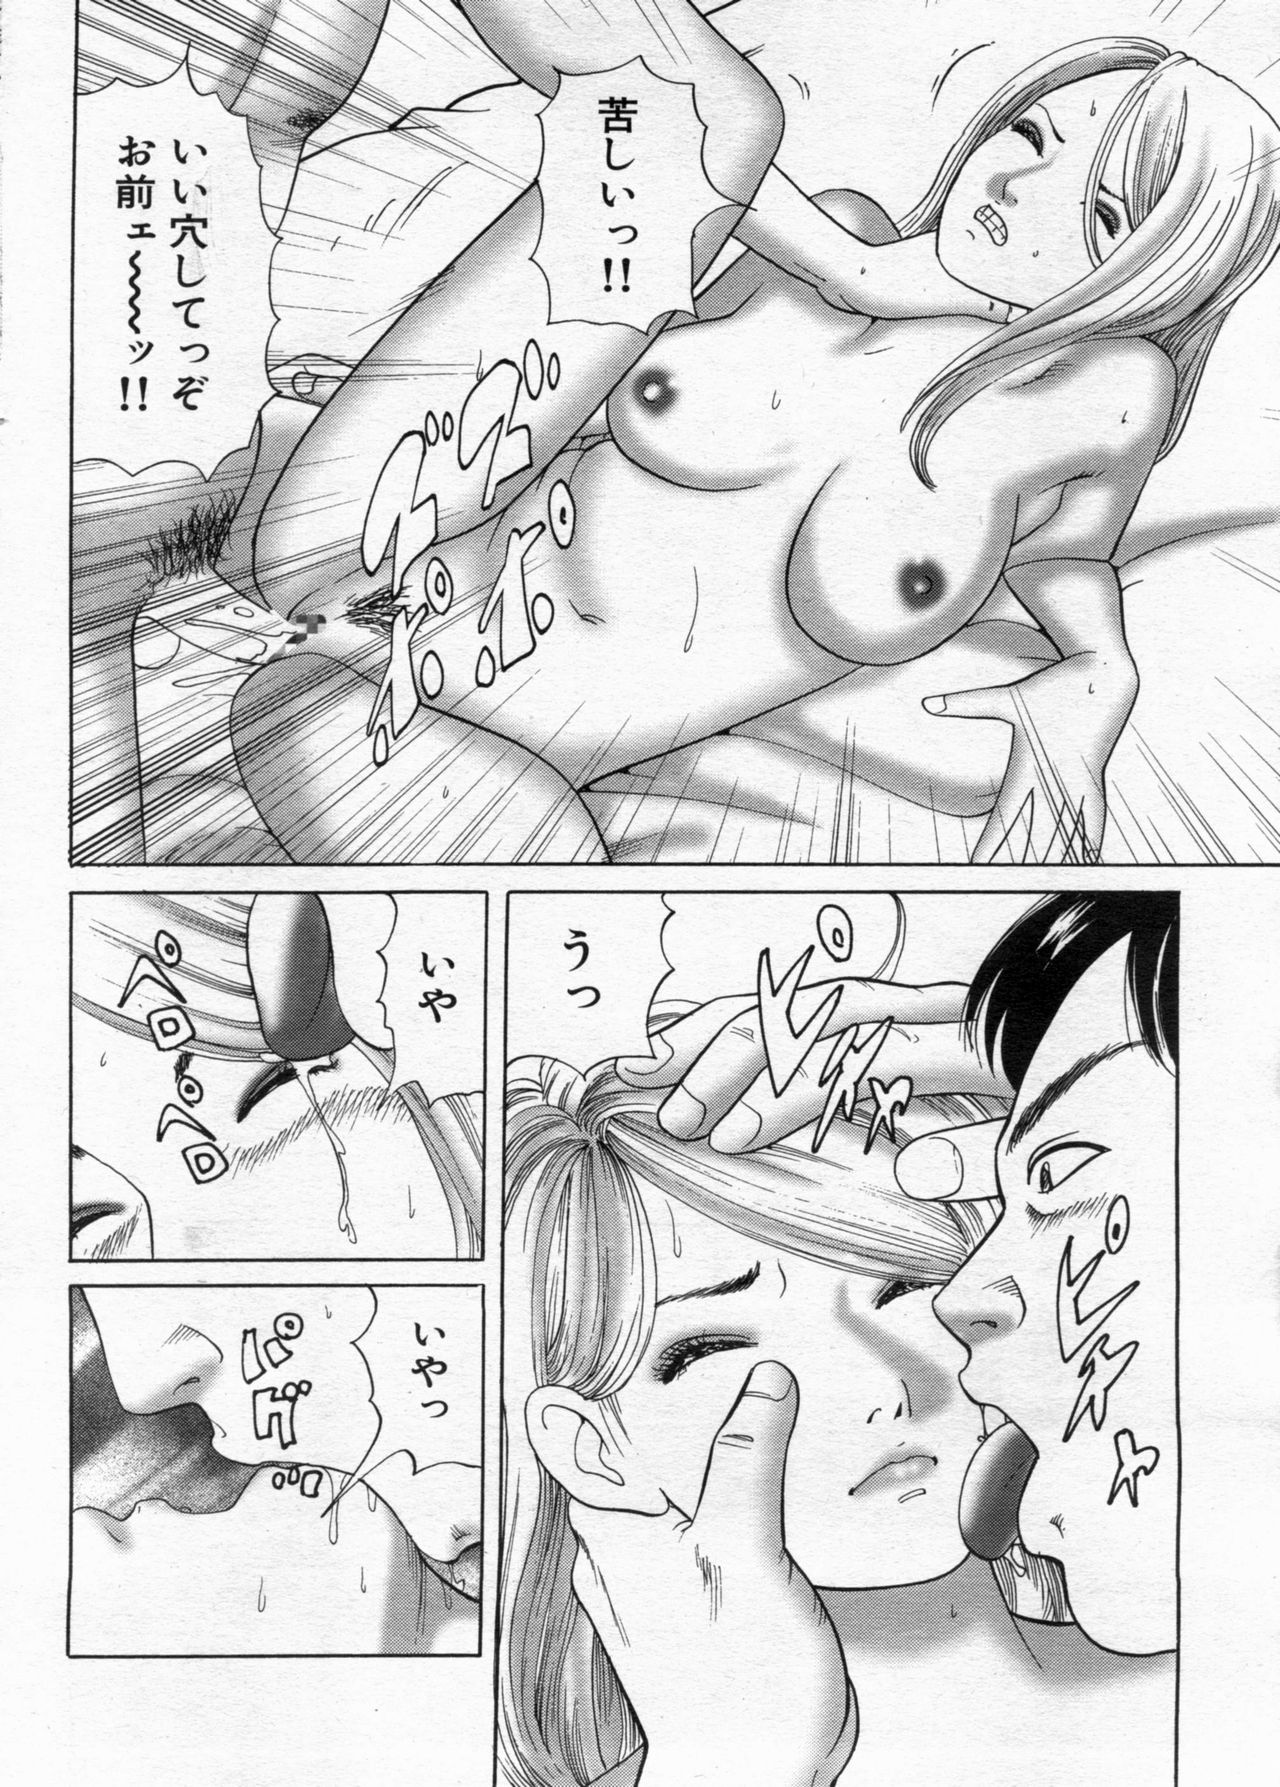 Manga Bon 2013-02 漫画ボン 2013年02月号